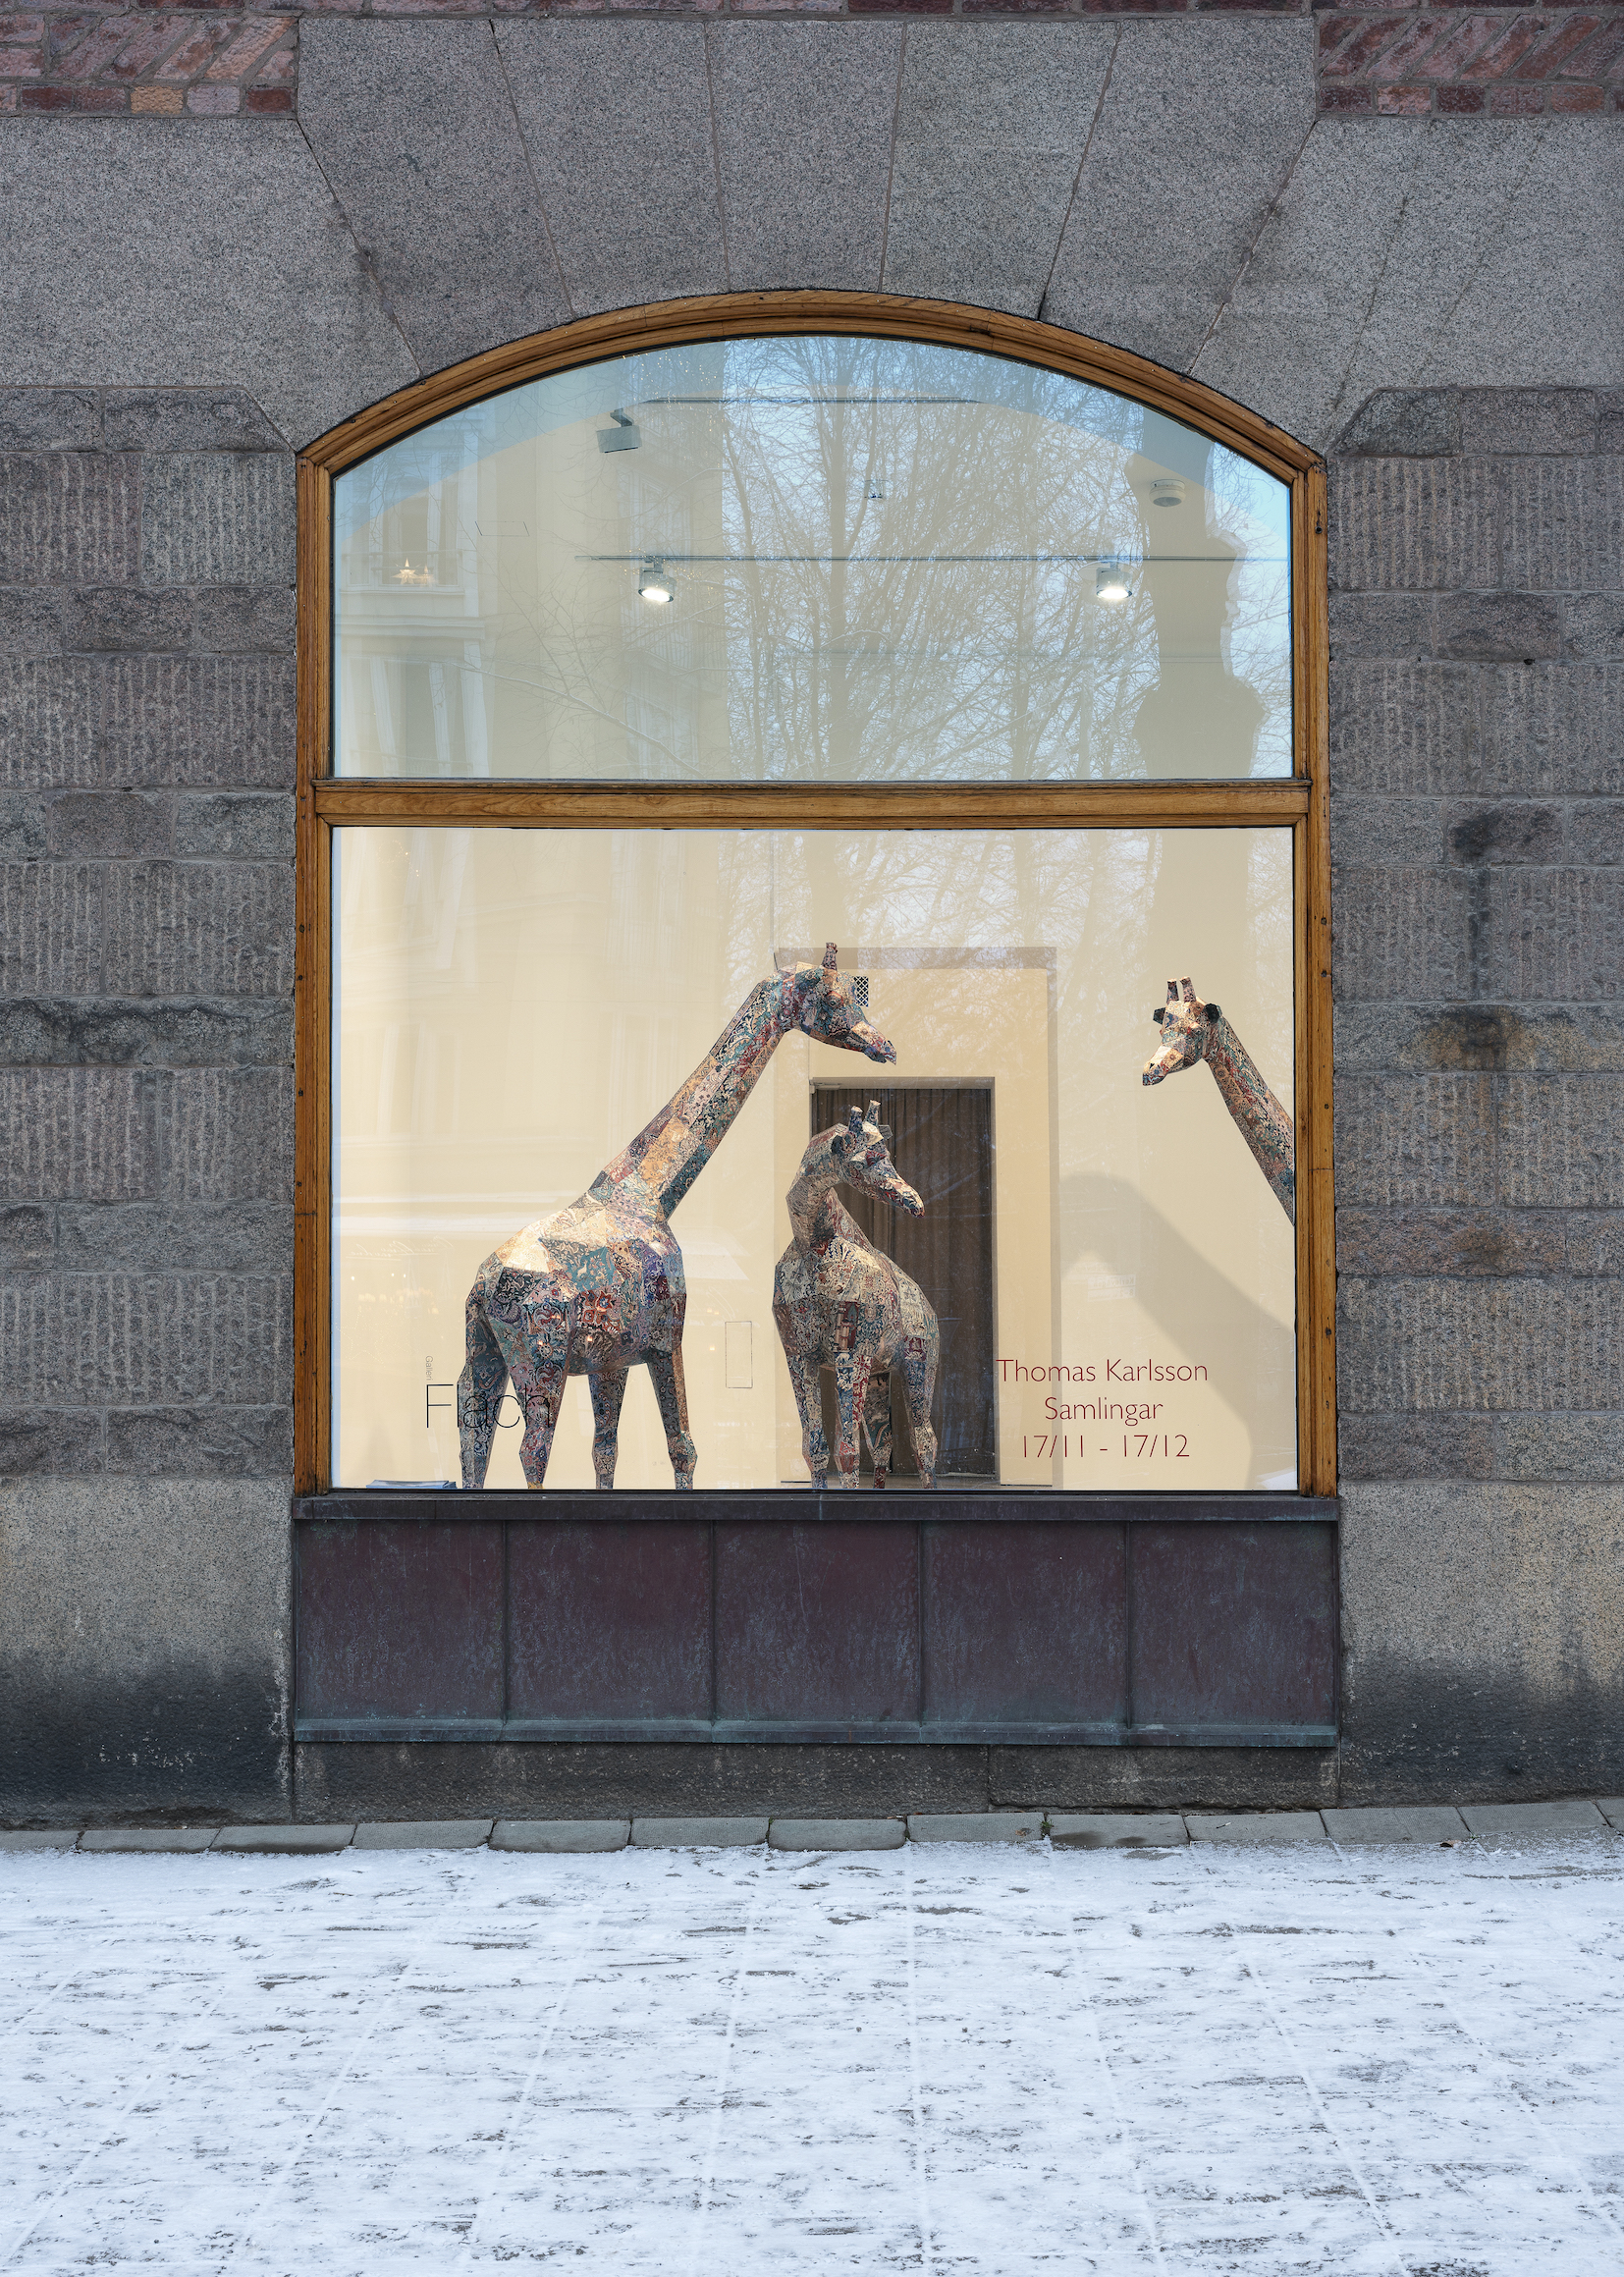 Thomas Karlsson, ”Samlingar” (Collections), 17/11 – 17/12 2022